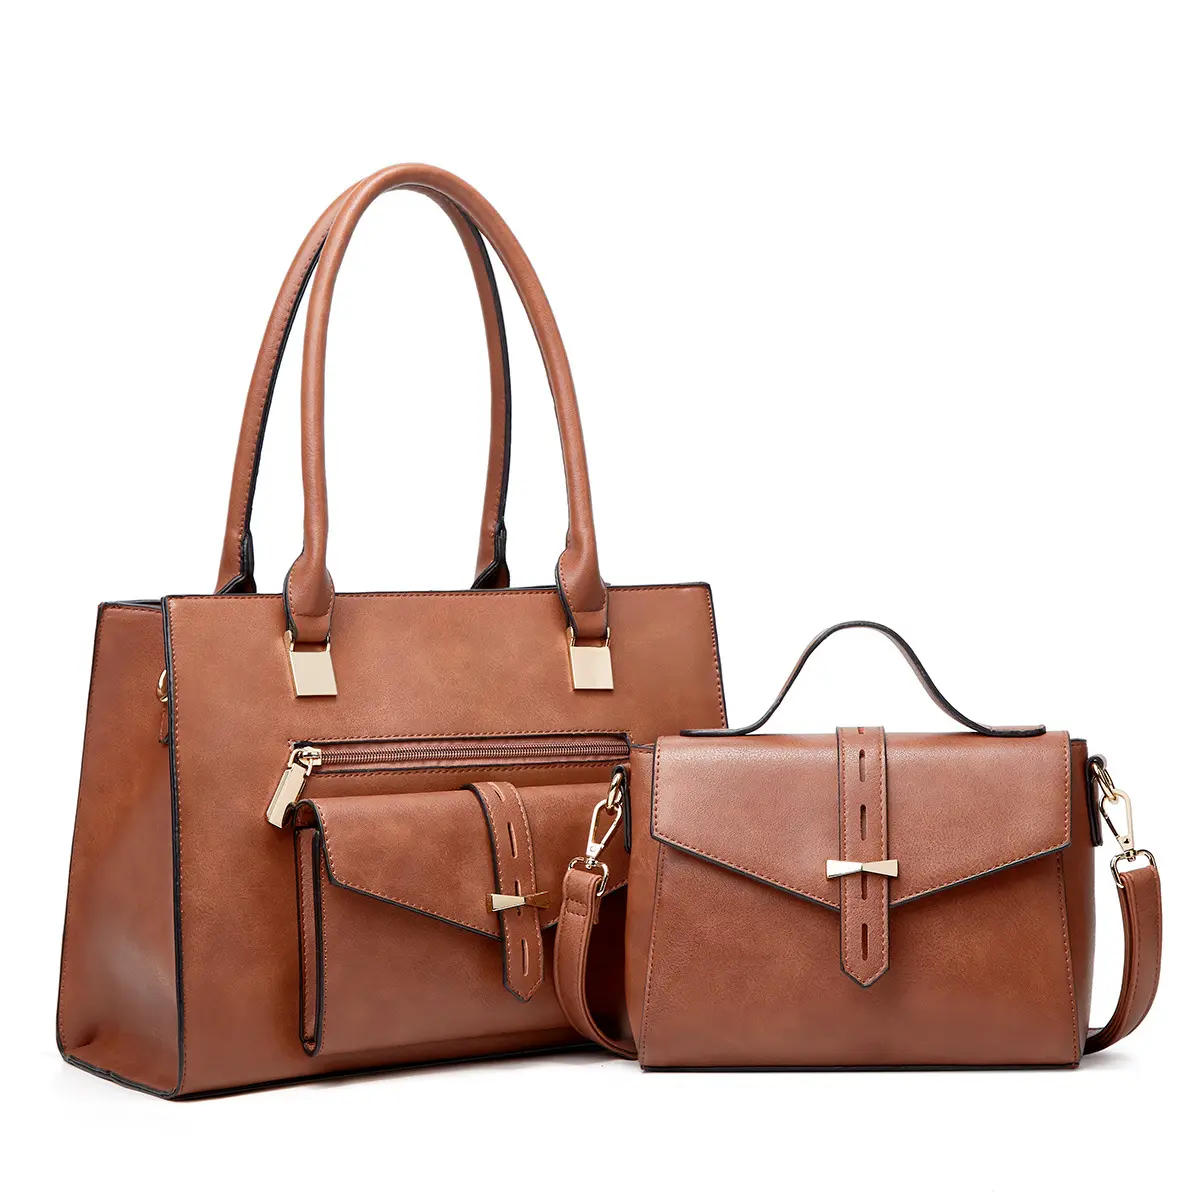 MU New Fashion Women's Fashion Trend Large Capacity One-shoulder Handbag Mother Bag Cheap Handbags